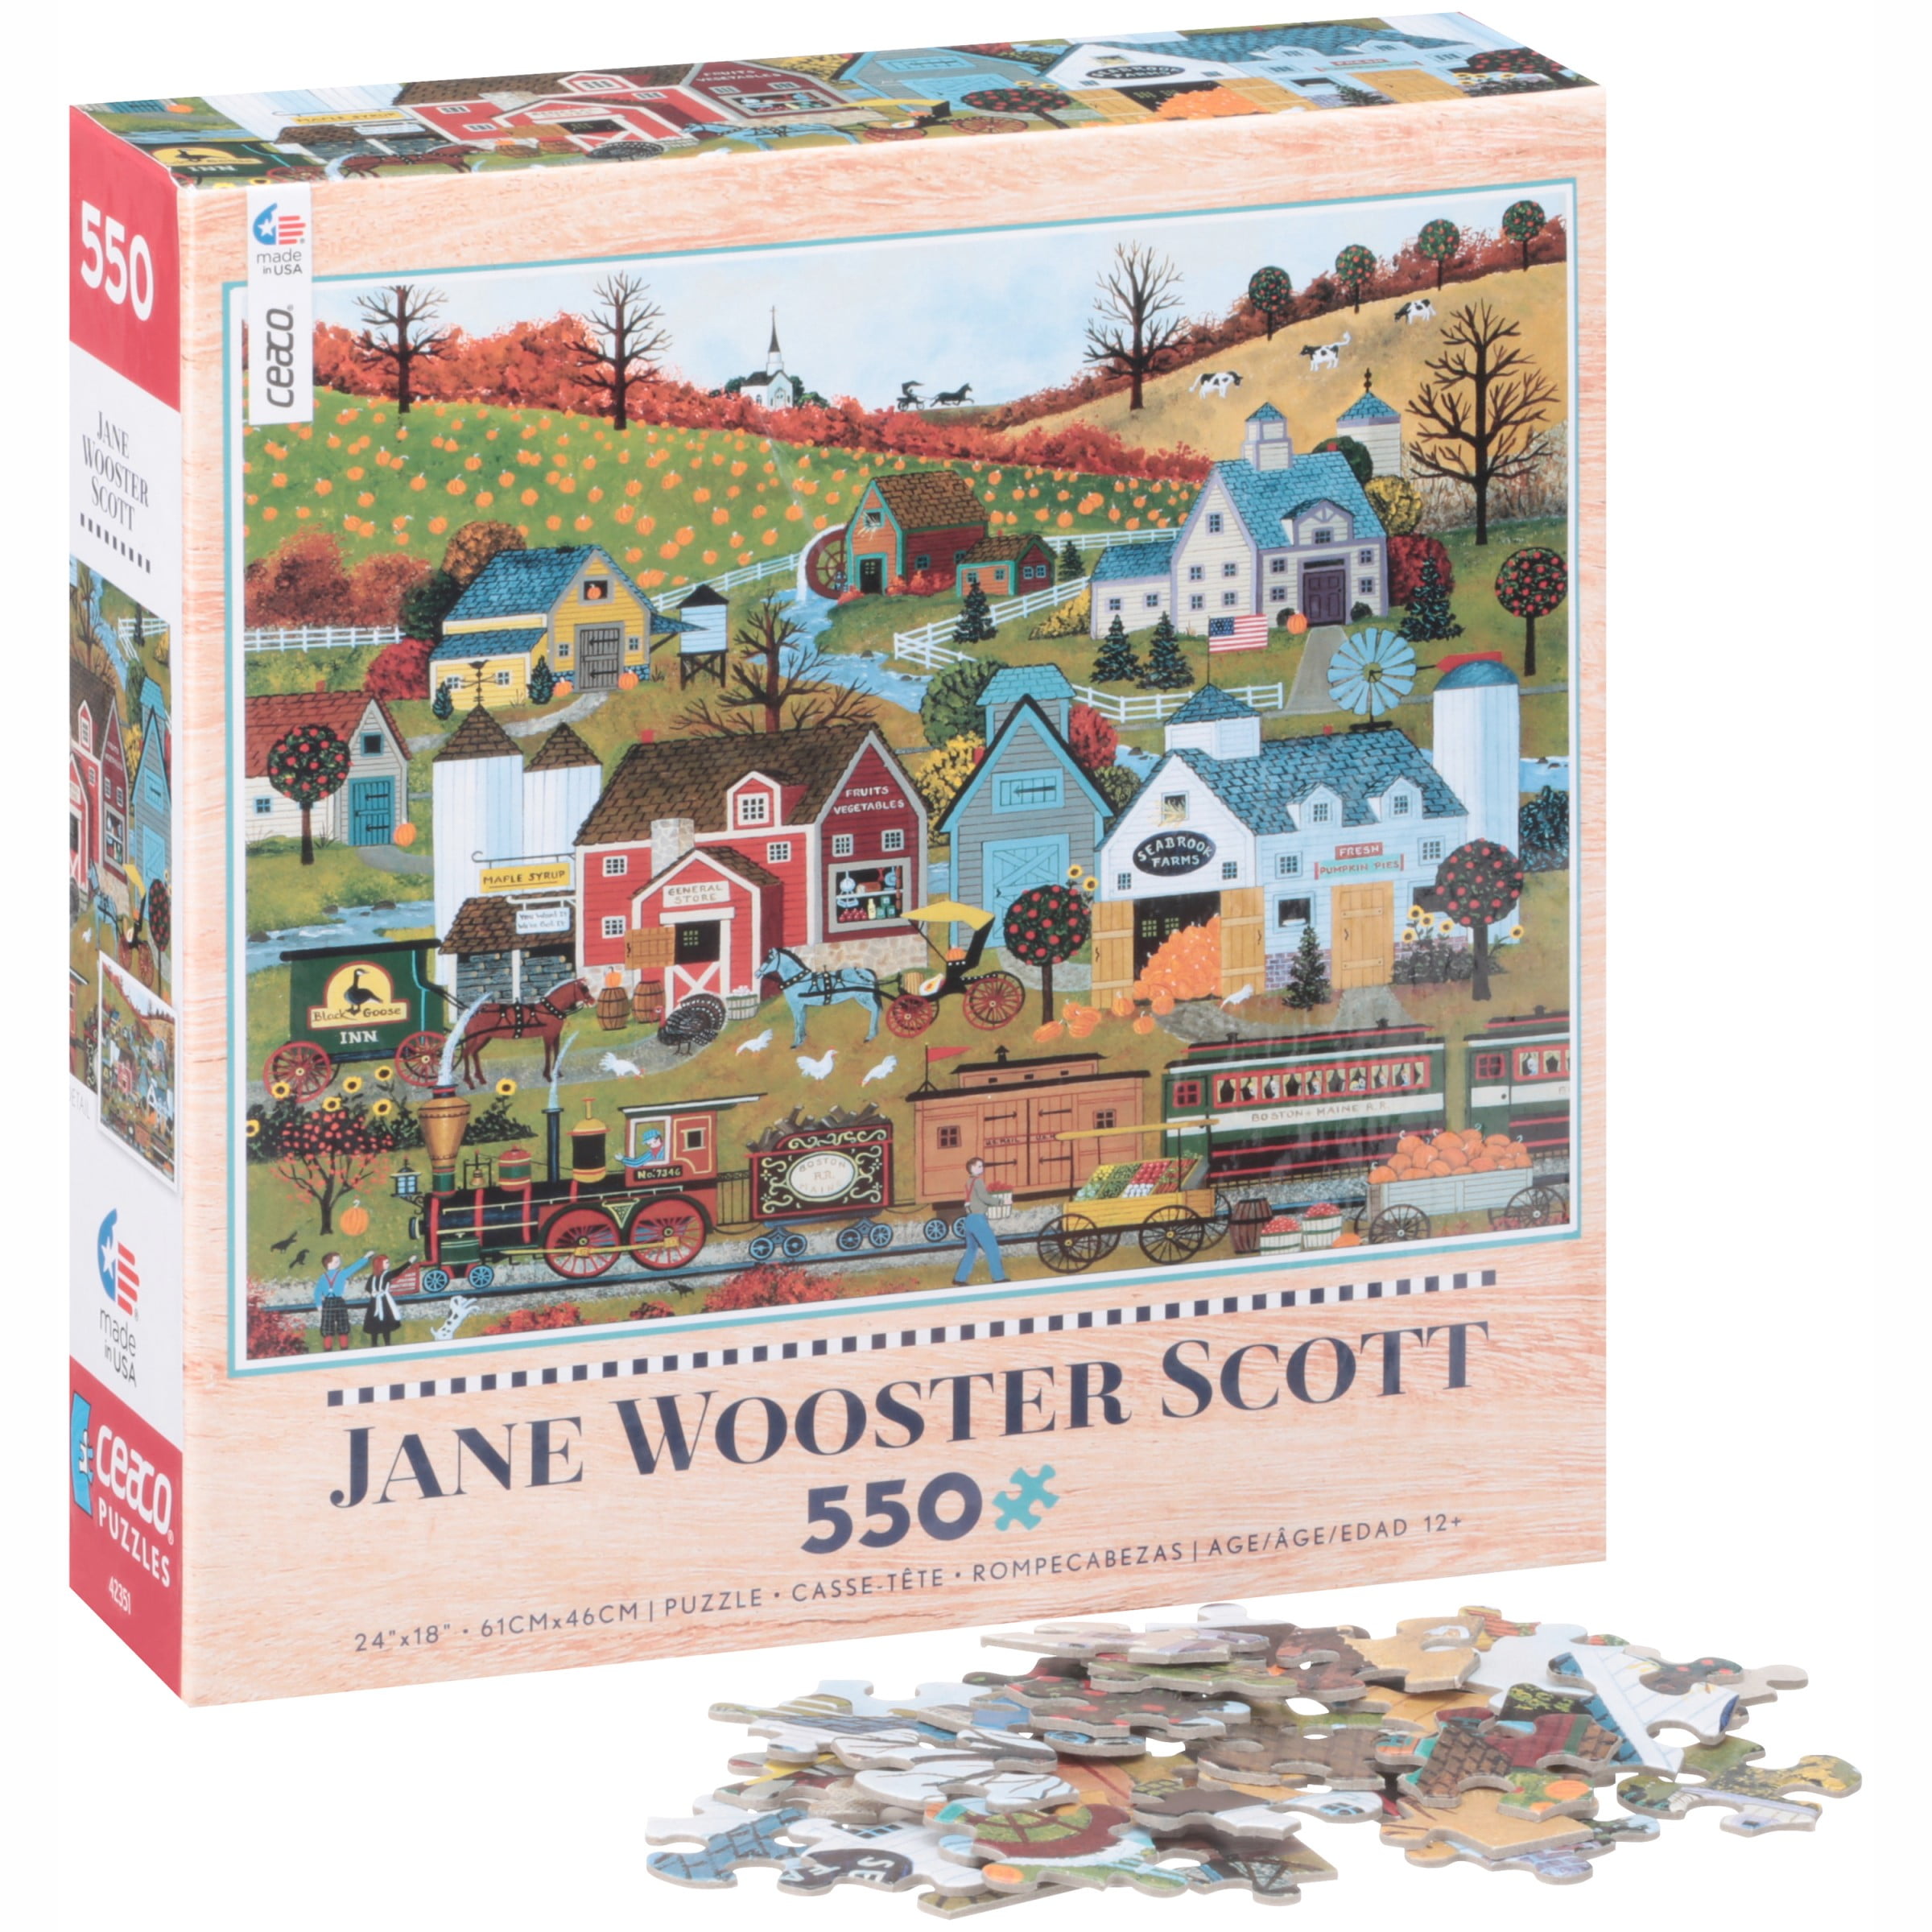 Jane Wooster Scott 550 piece jigsaw puzzle New 